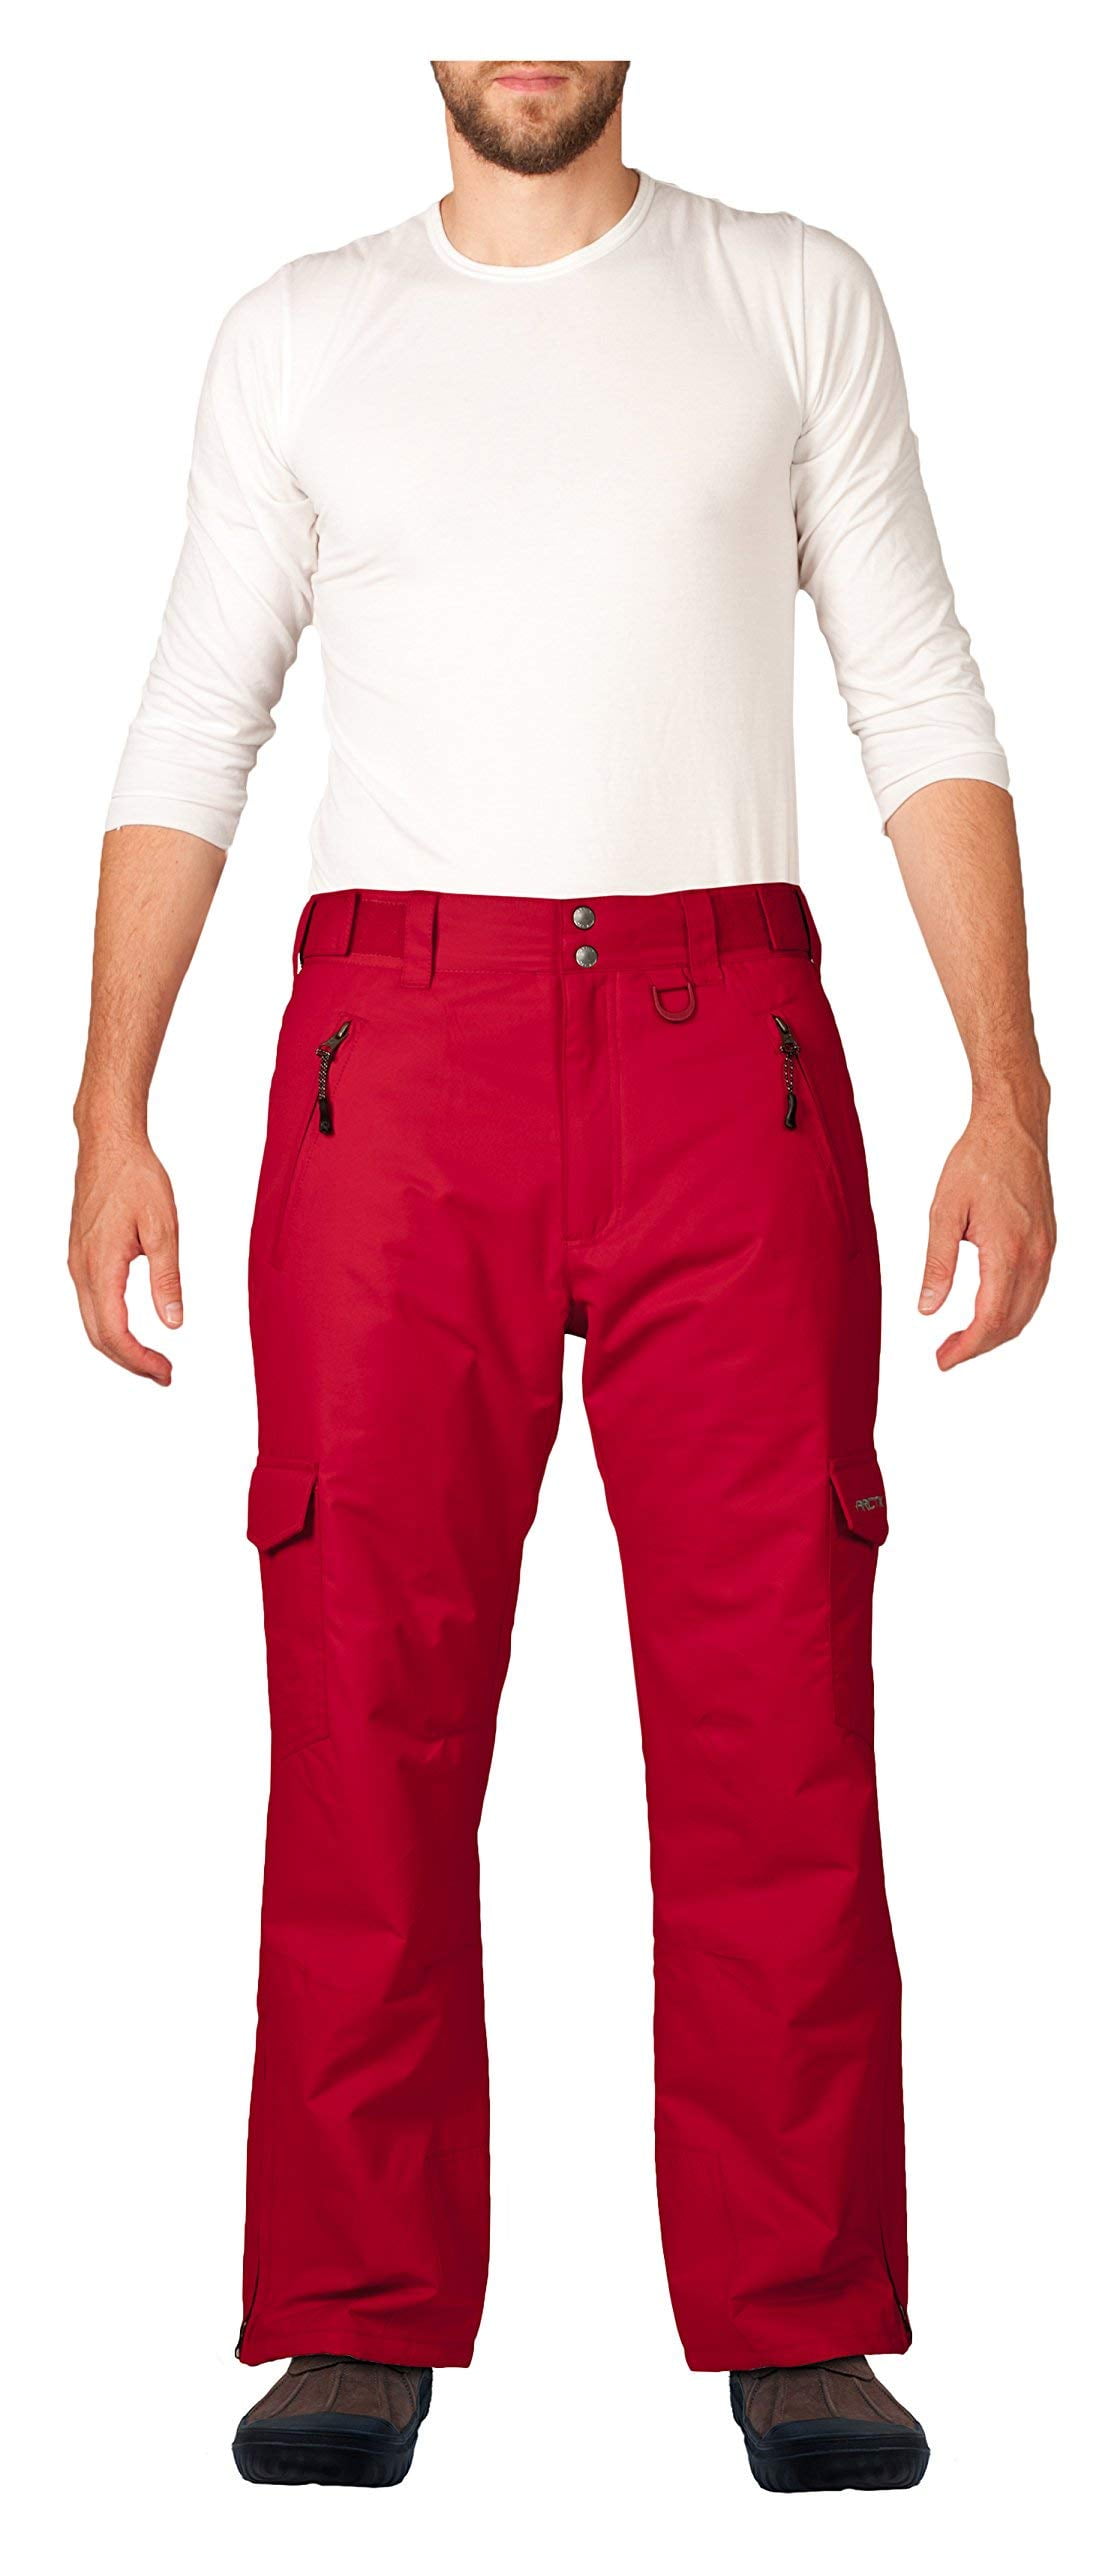 Arctix Men's Snow Sports Cargo Pants, Realtree MAX-5 Camo, Medium/Regular 